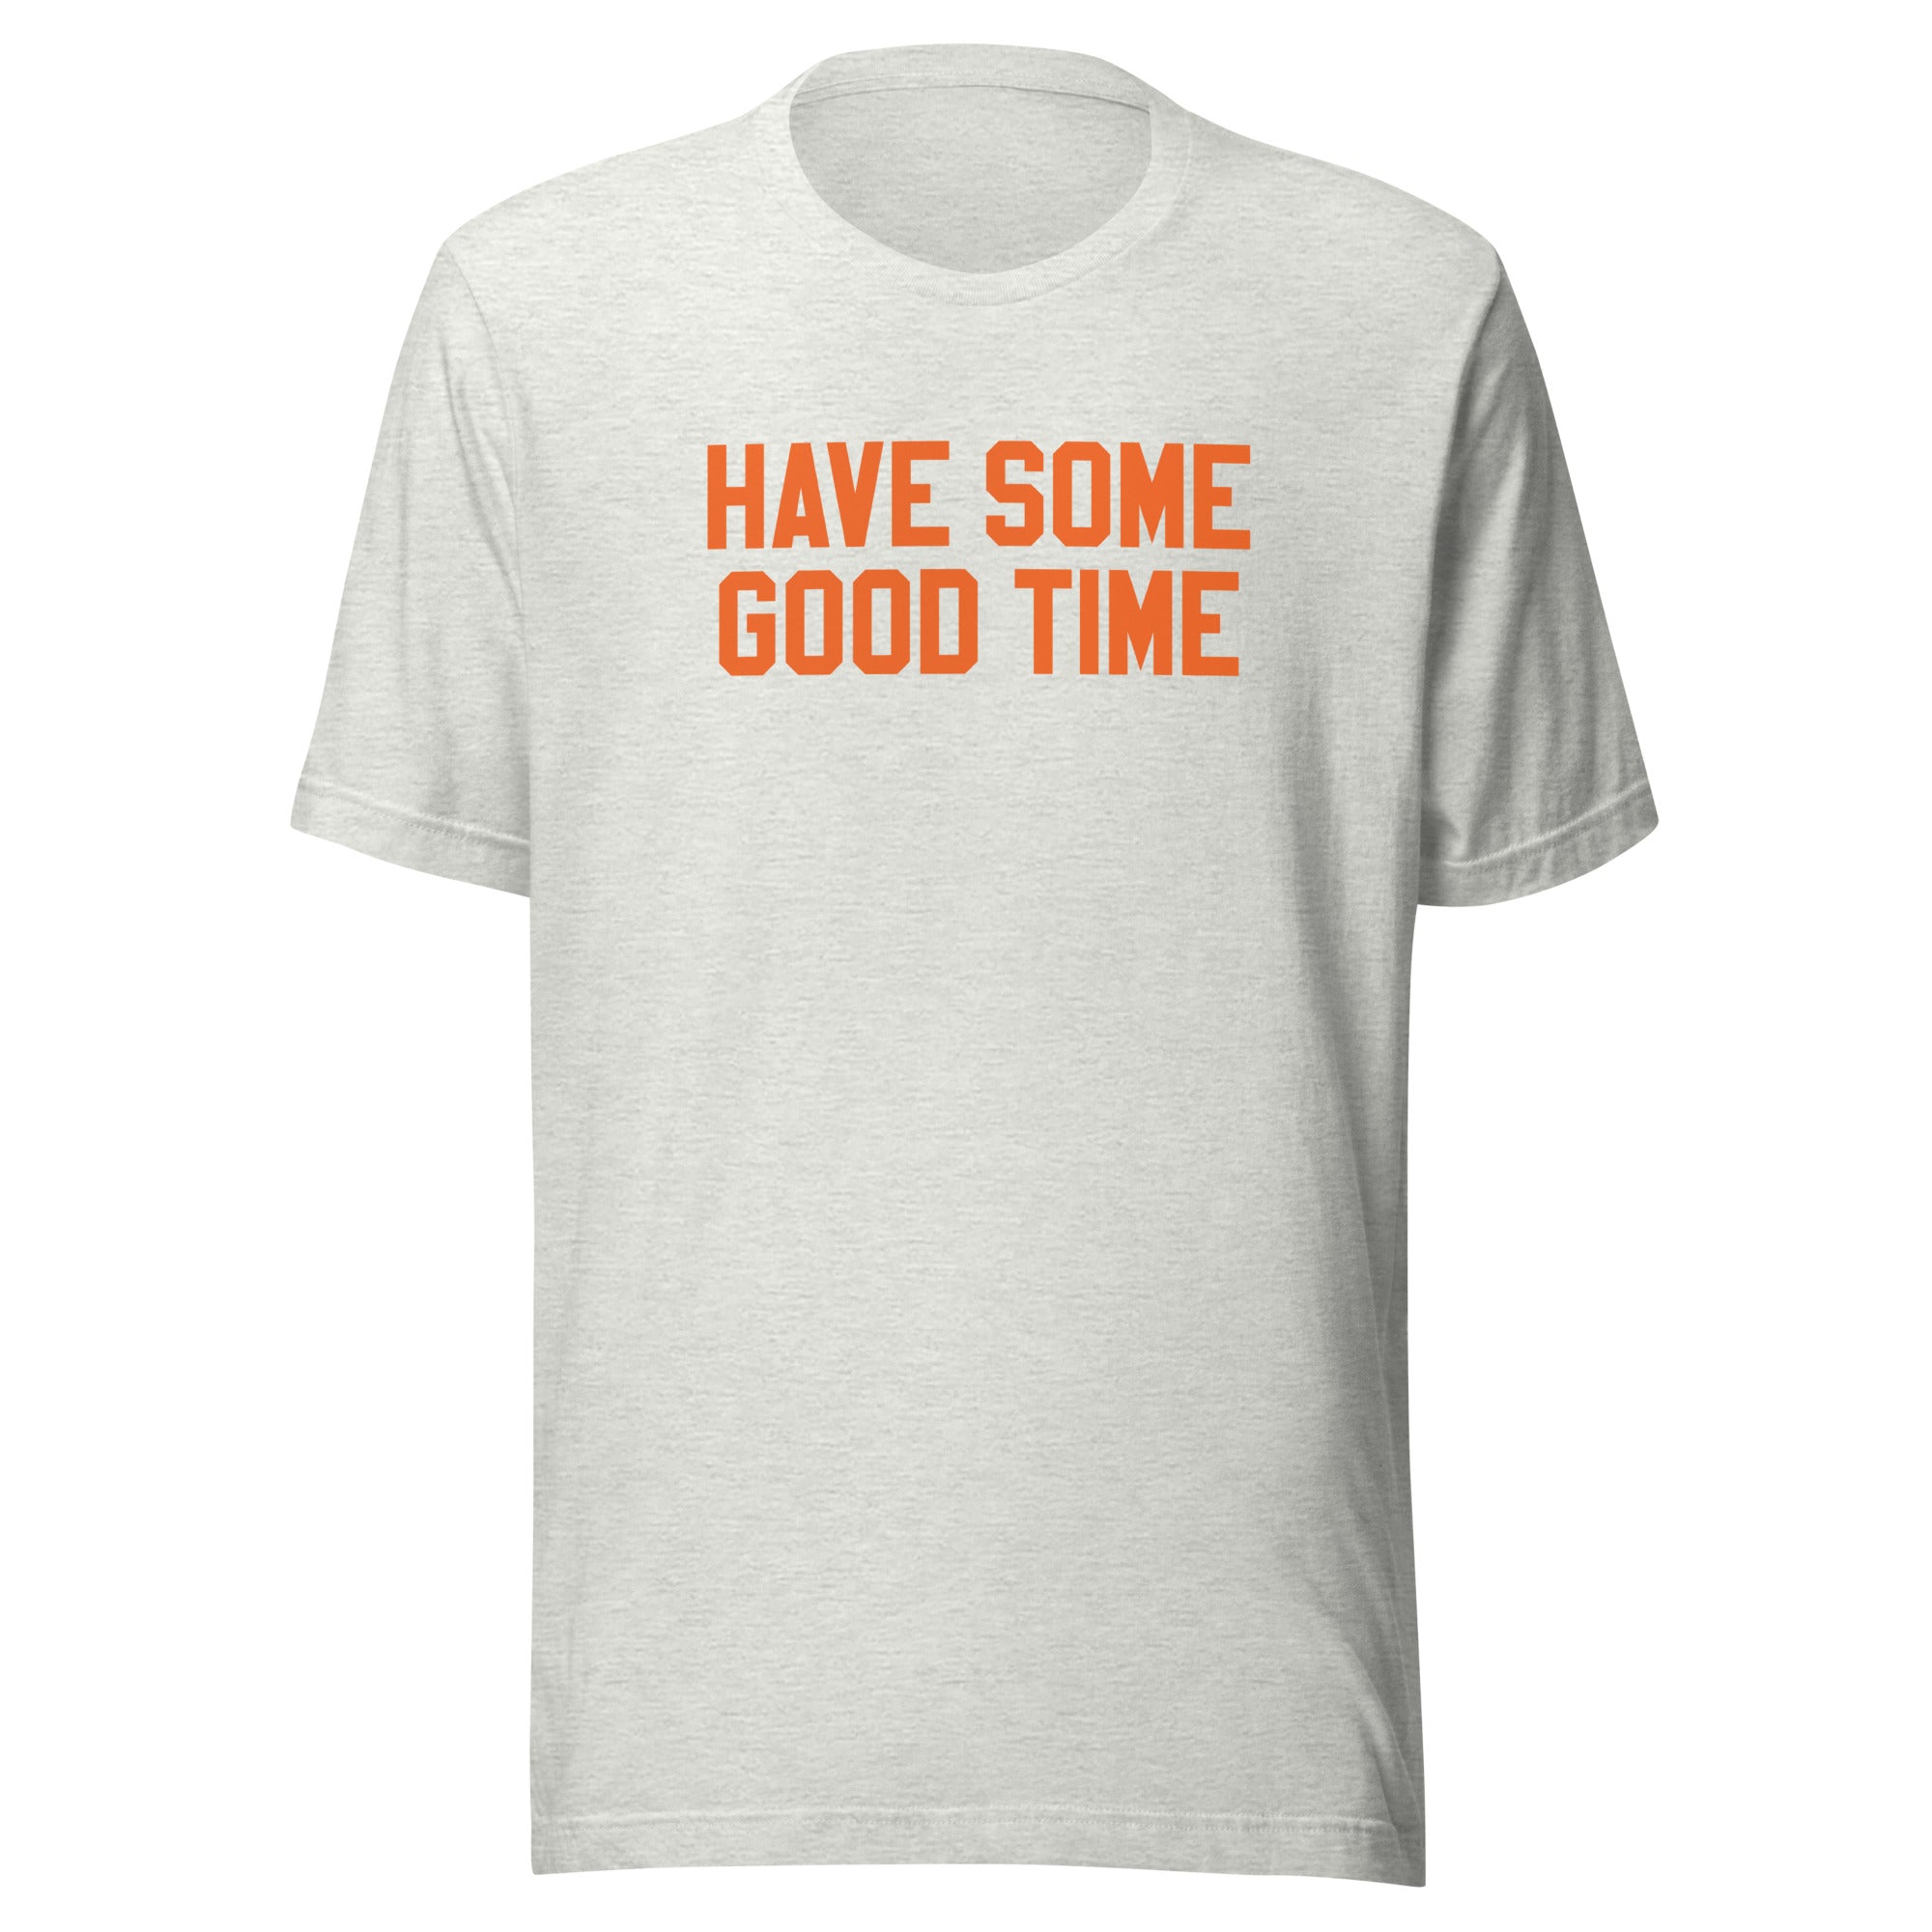 Conan O'Brien Needs A Friend: Have Some Good Time T-shirt (Ash)